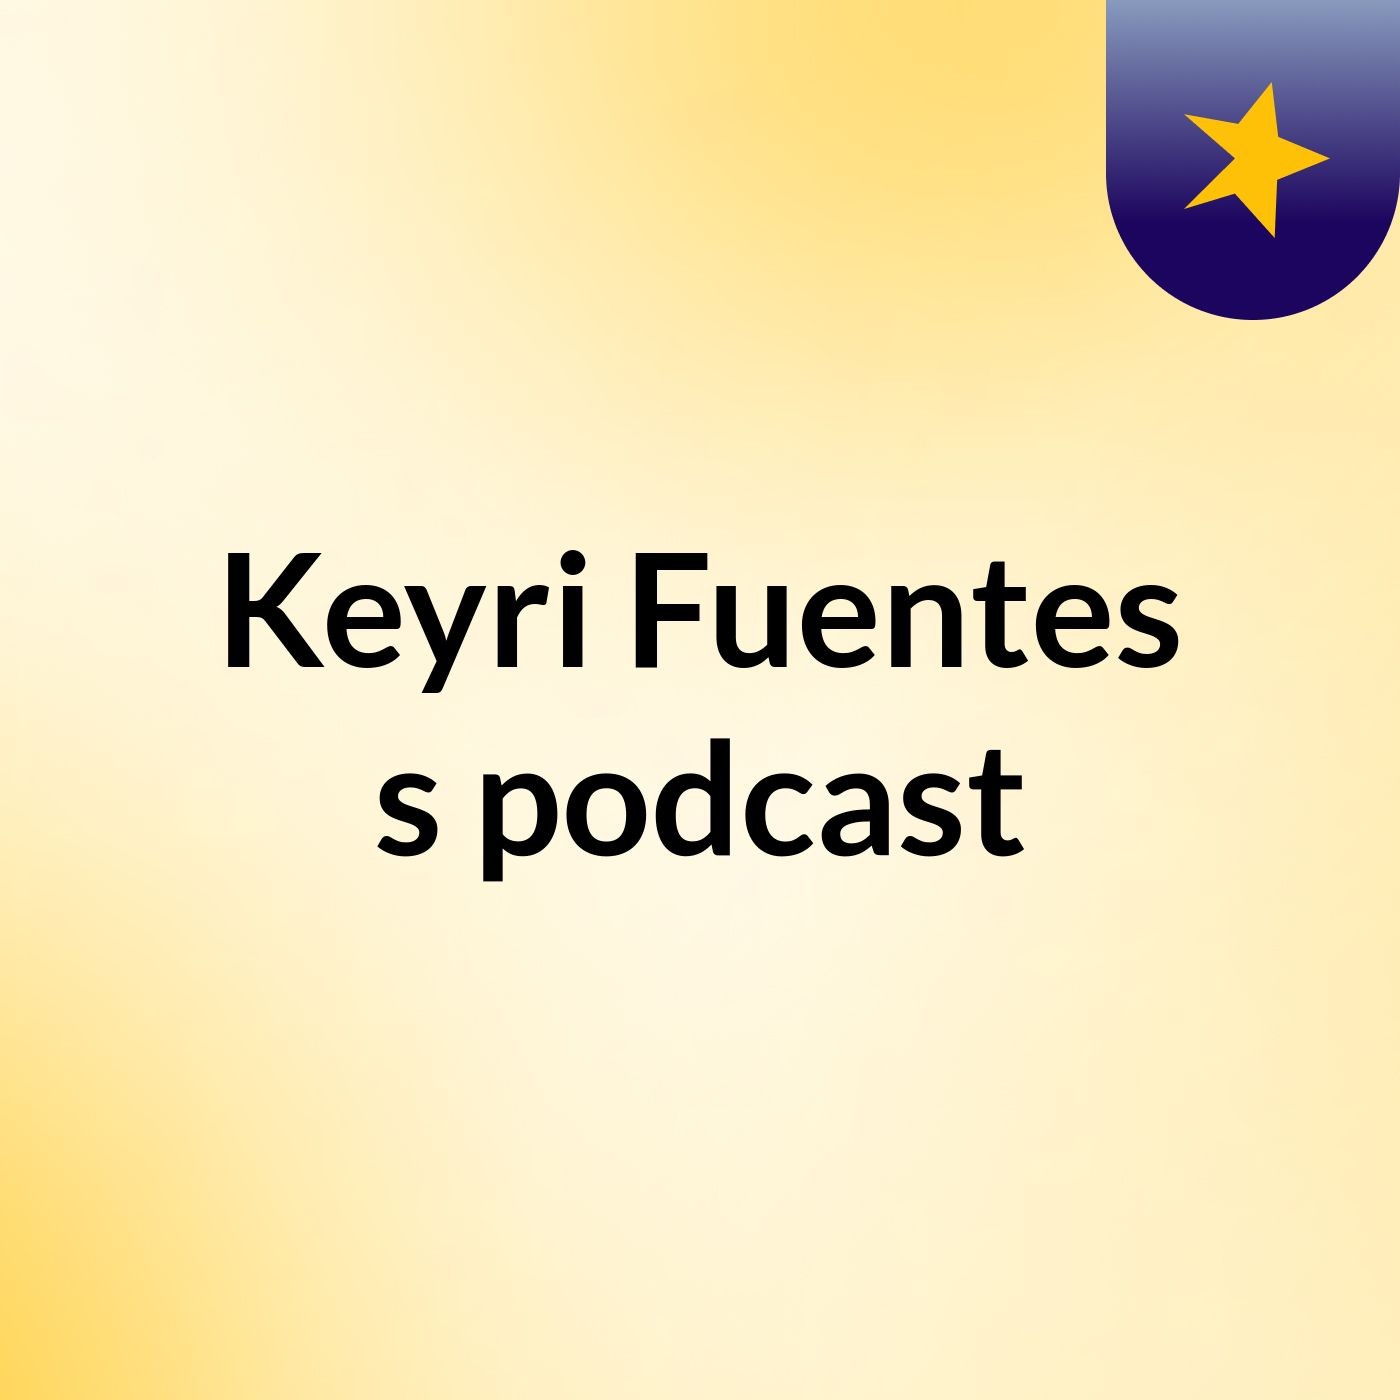 Keyri Fuentes's podcast